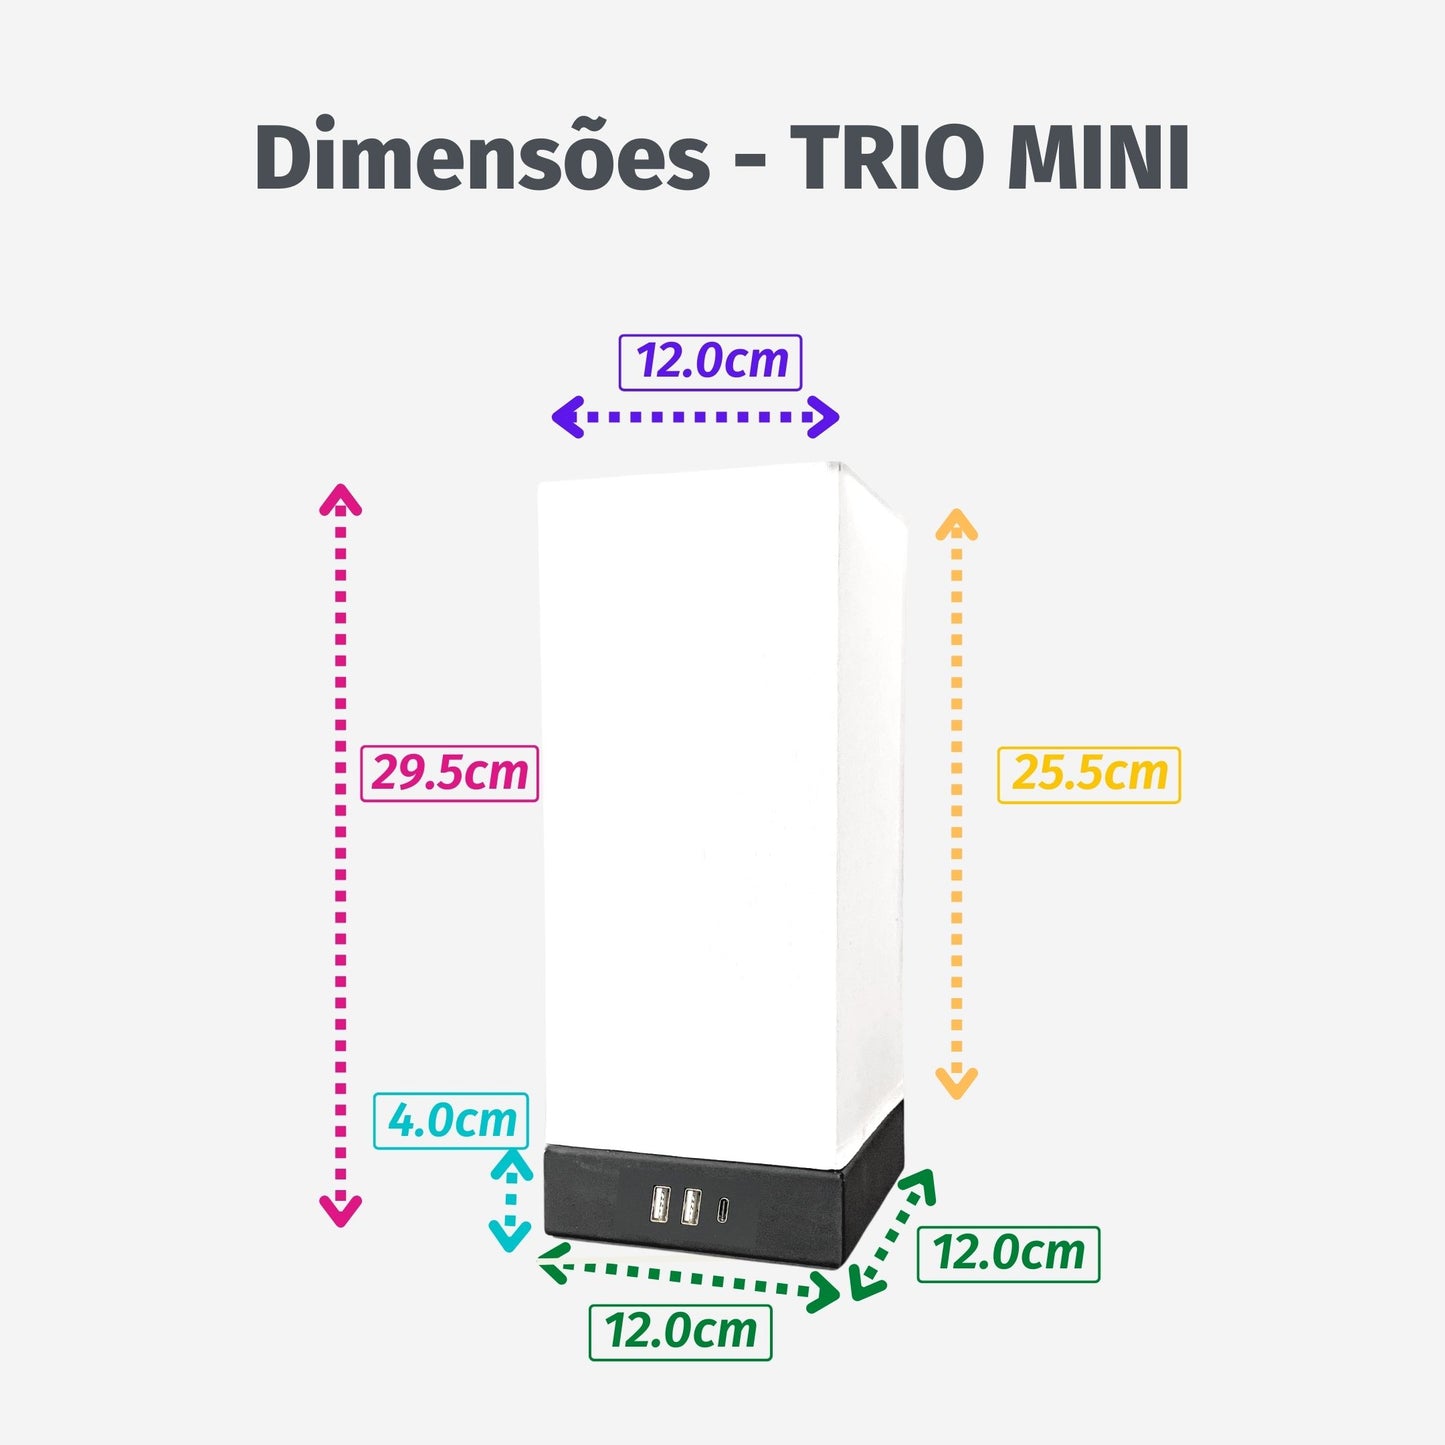 TRIO M USB | 3 portas 17W | 2A + 1 tipo C